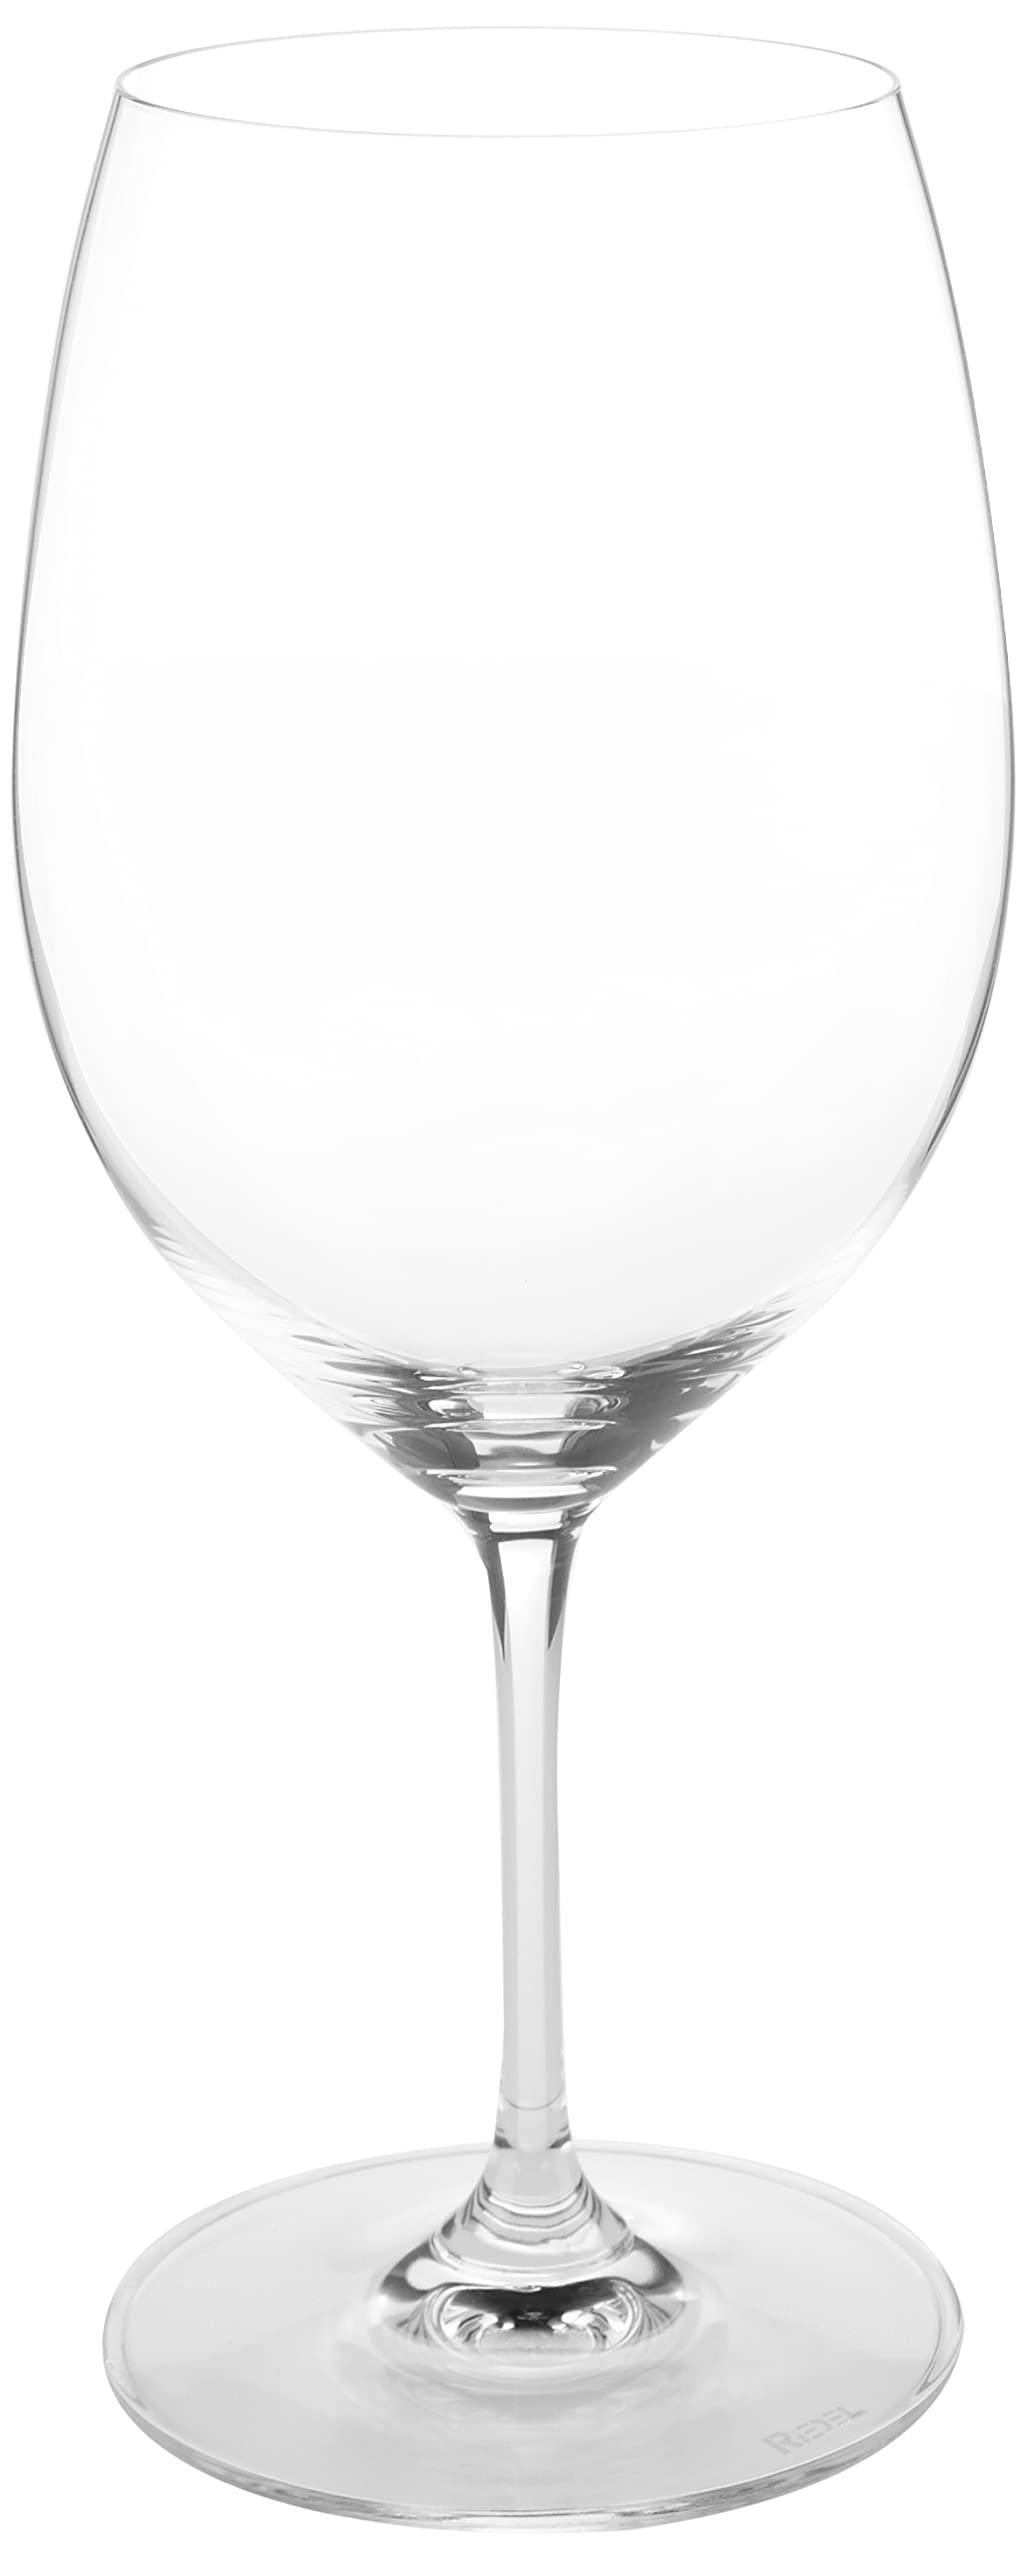 Riedel Vinum XL Water Glass, Set of 2